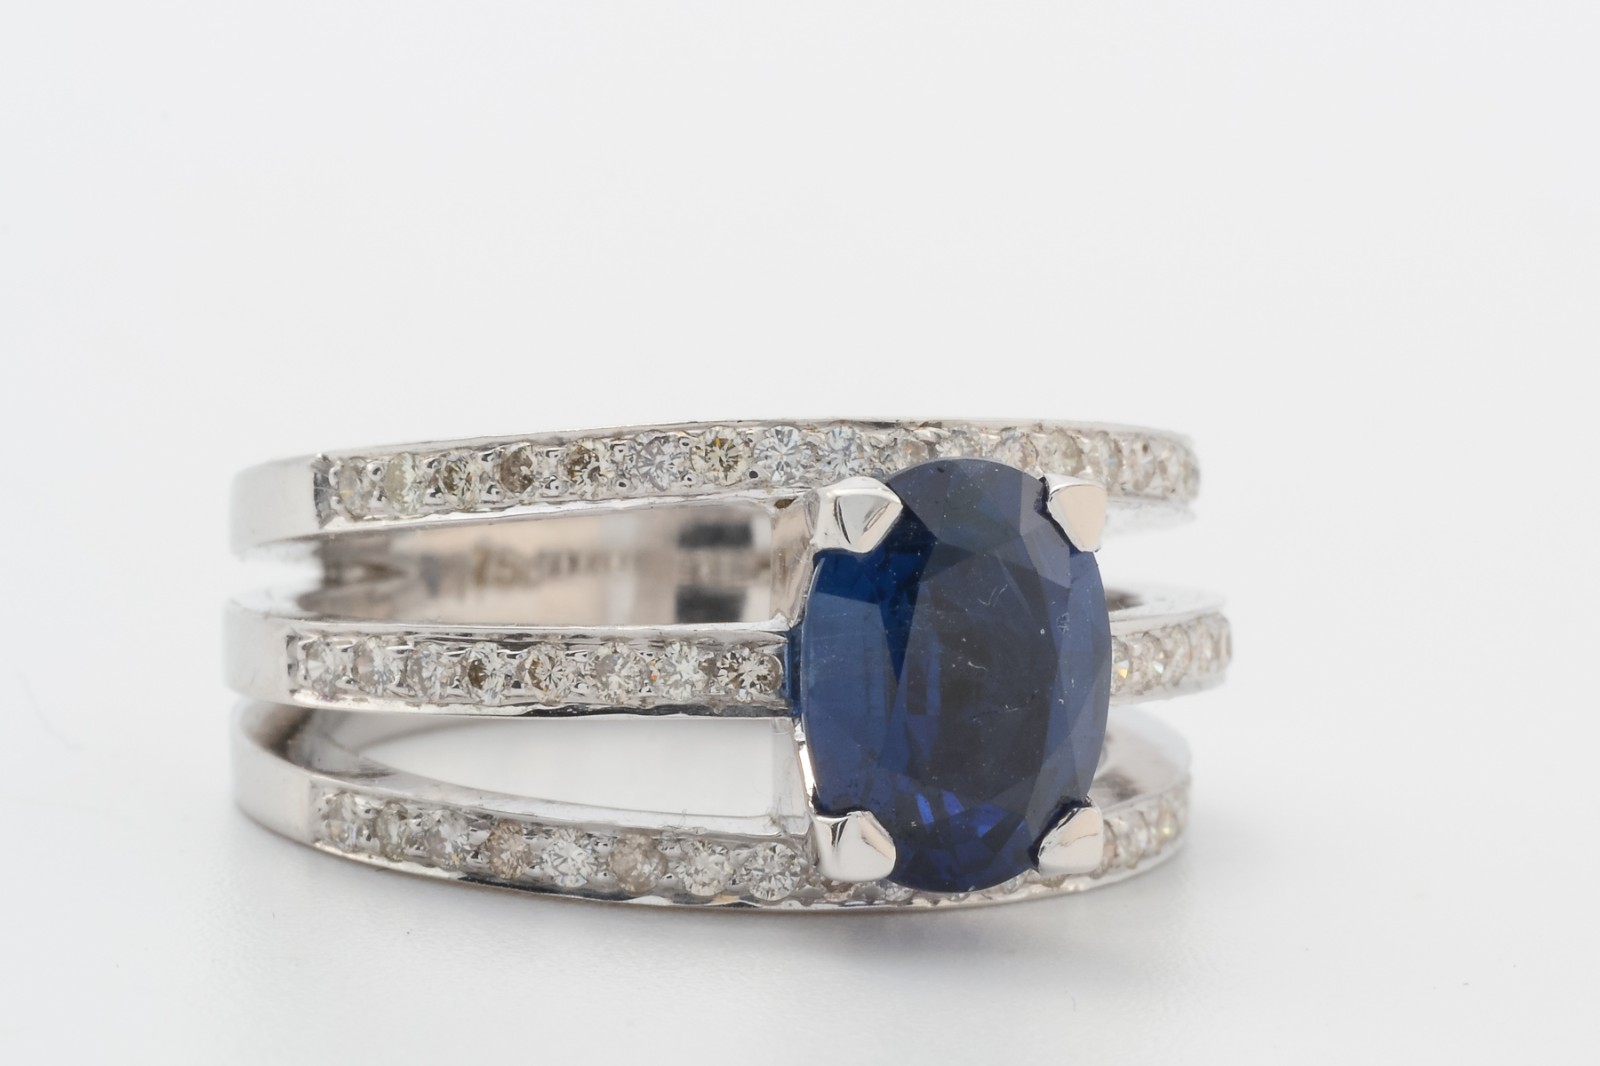 kanal I de fleste tilfælde skovl Ring with sapphire and diamonds | Lauritz.com